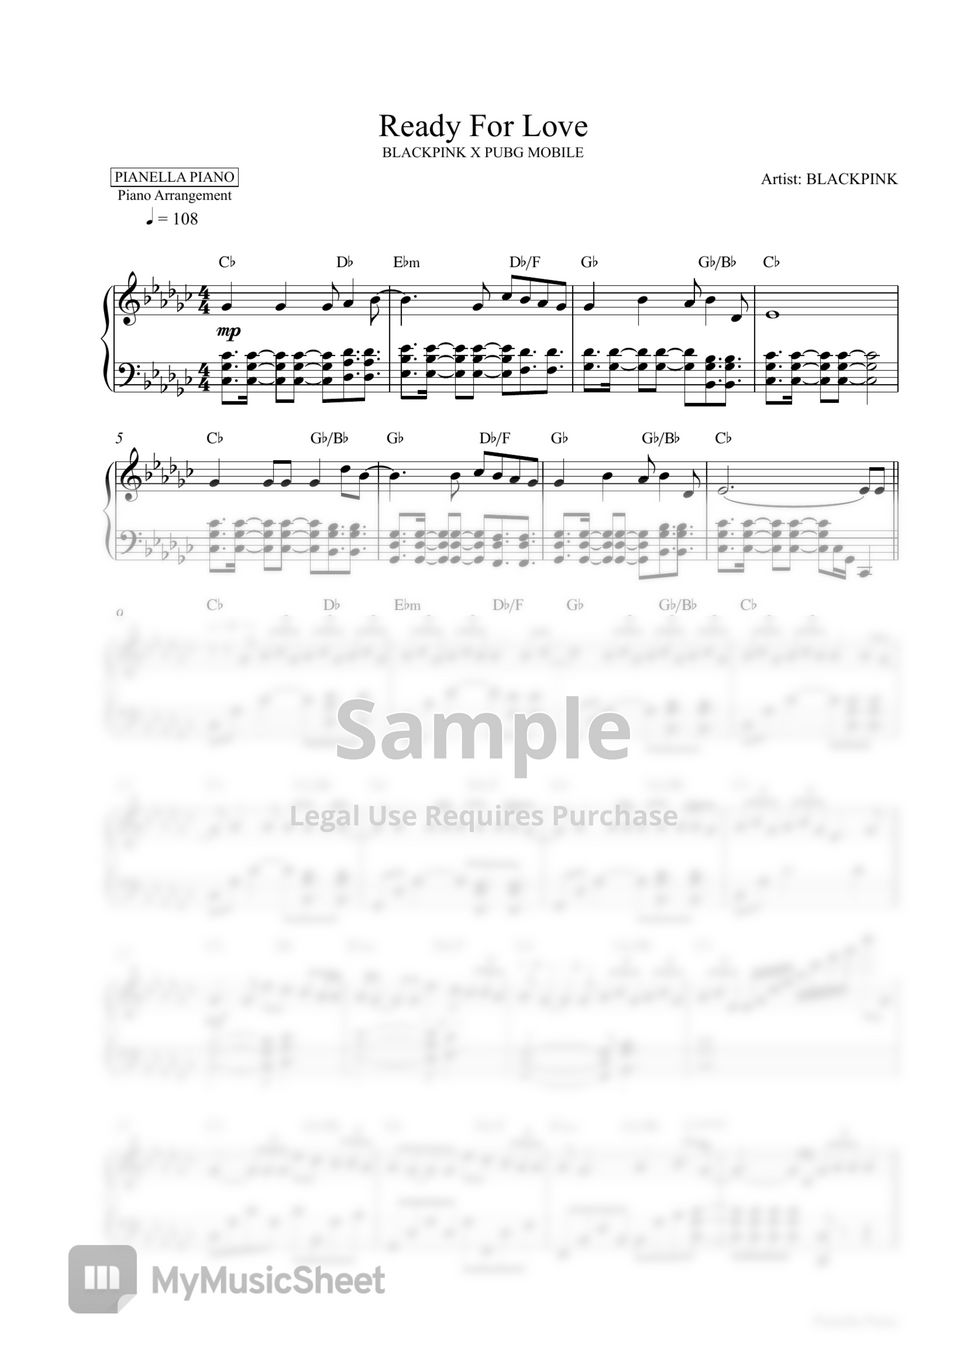 BLACKPINK X PUBGM - Ready For Love (2 PDF in Original Key Gb Major + Easier Key G Major) by Pianella Piano